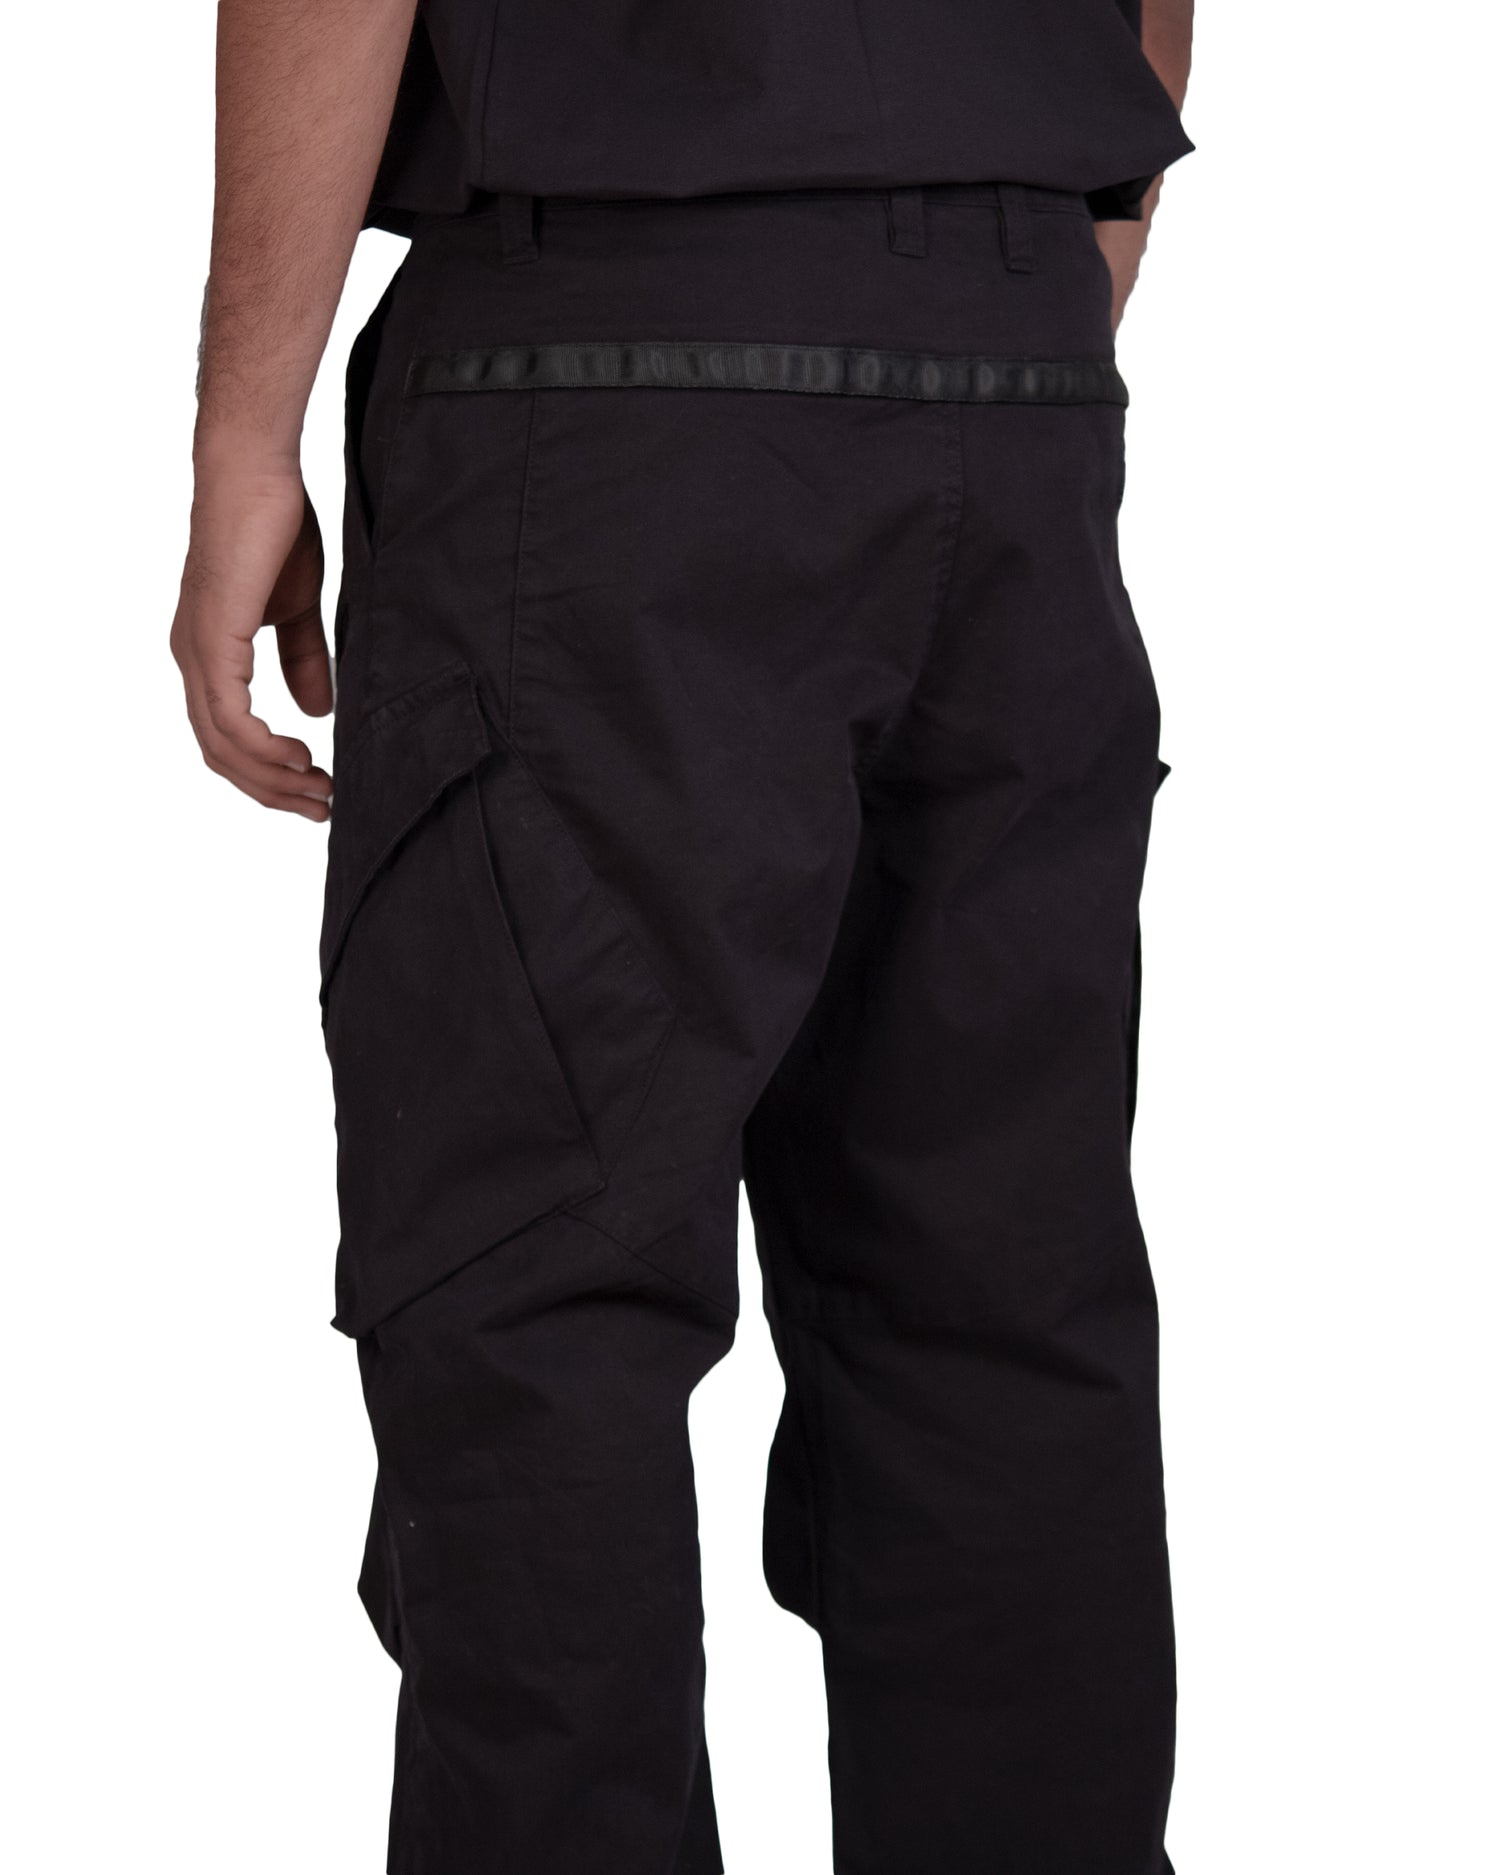 Hexa Pocket Pants (Black)